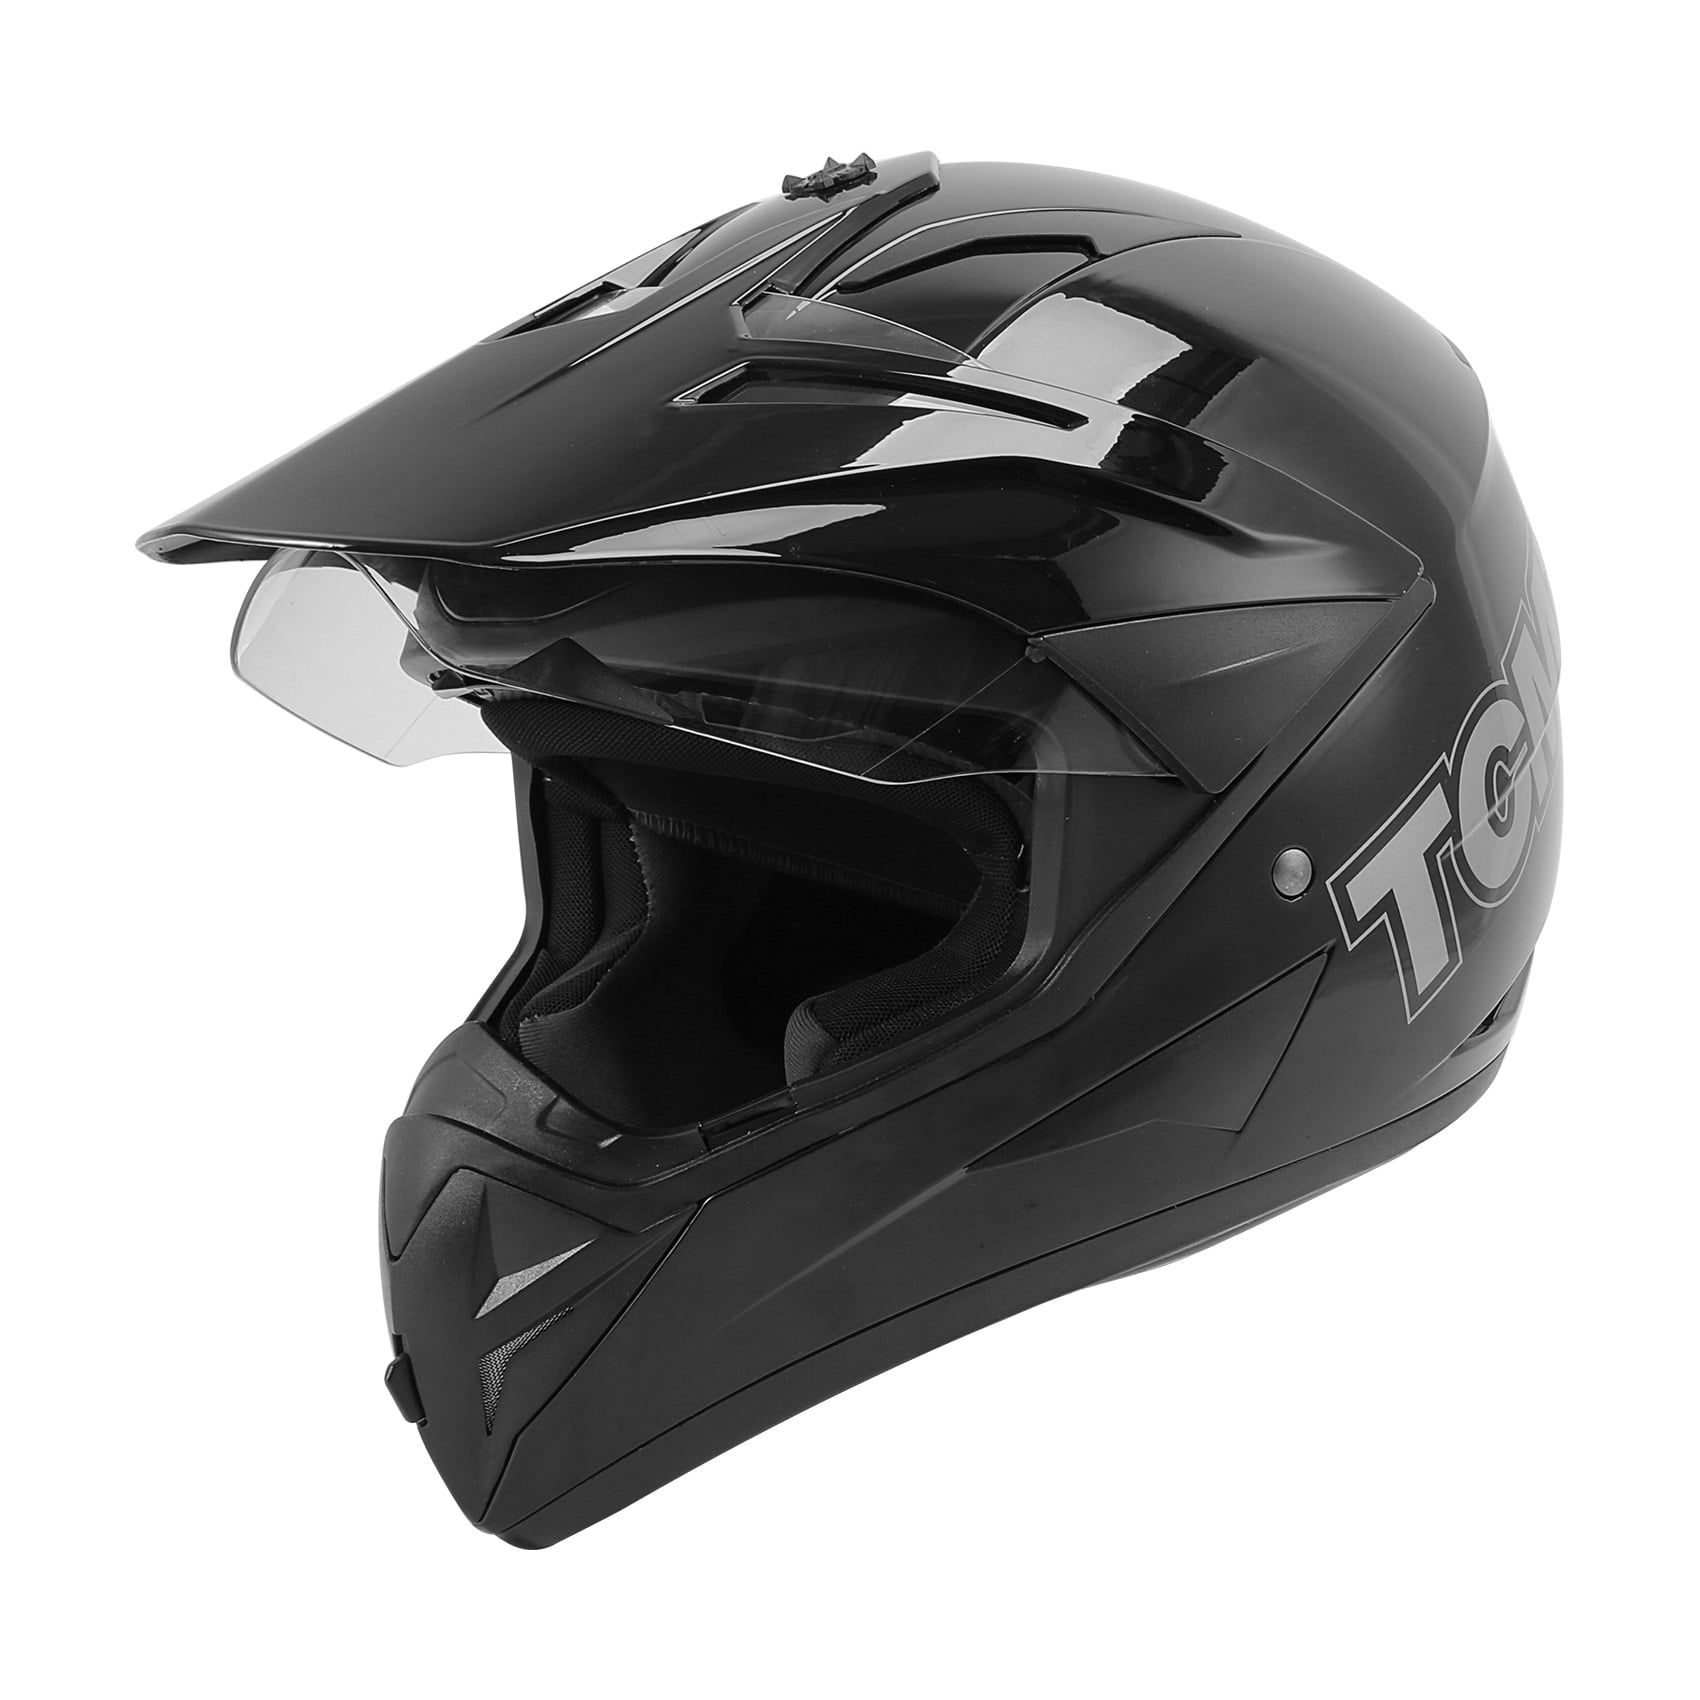 KAPPA KV30 Enduro Full Face Adventure Style Dual Sport Motorcycle Bike Helmets 